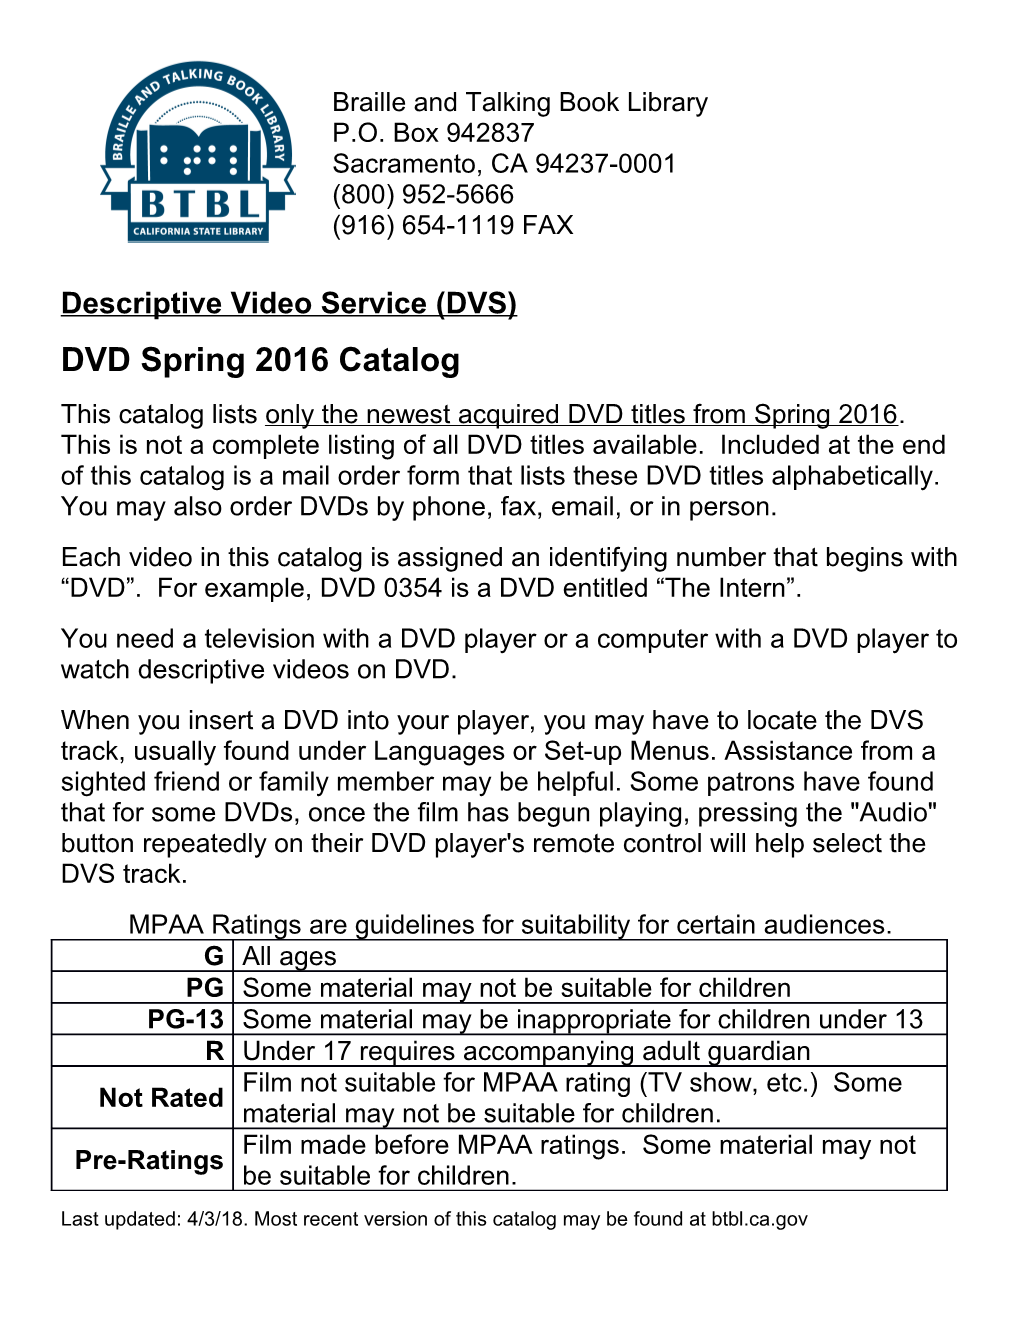 DVD Spring 2015 Catalog